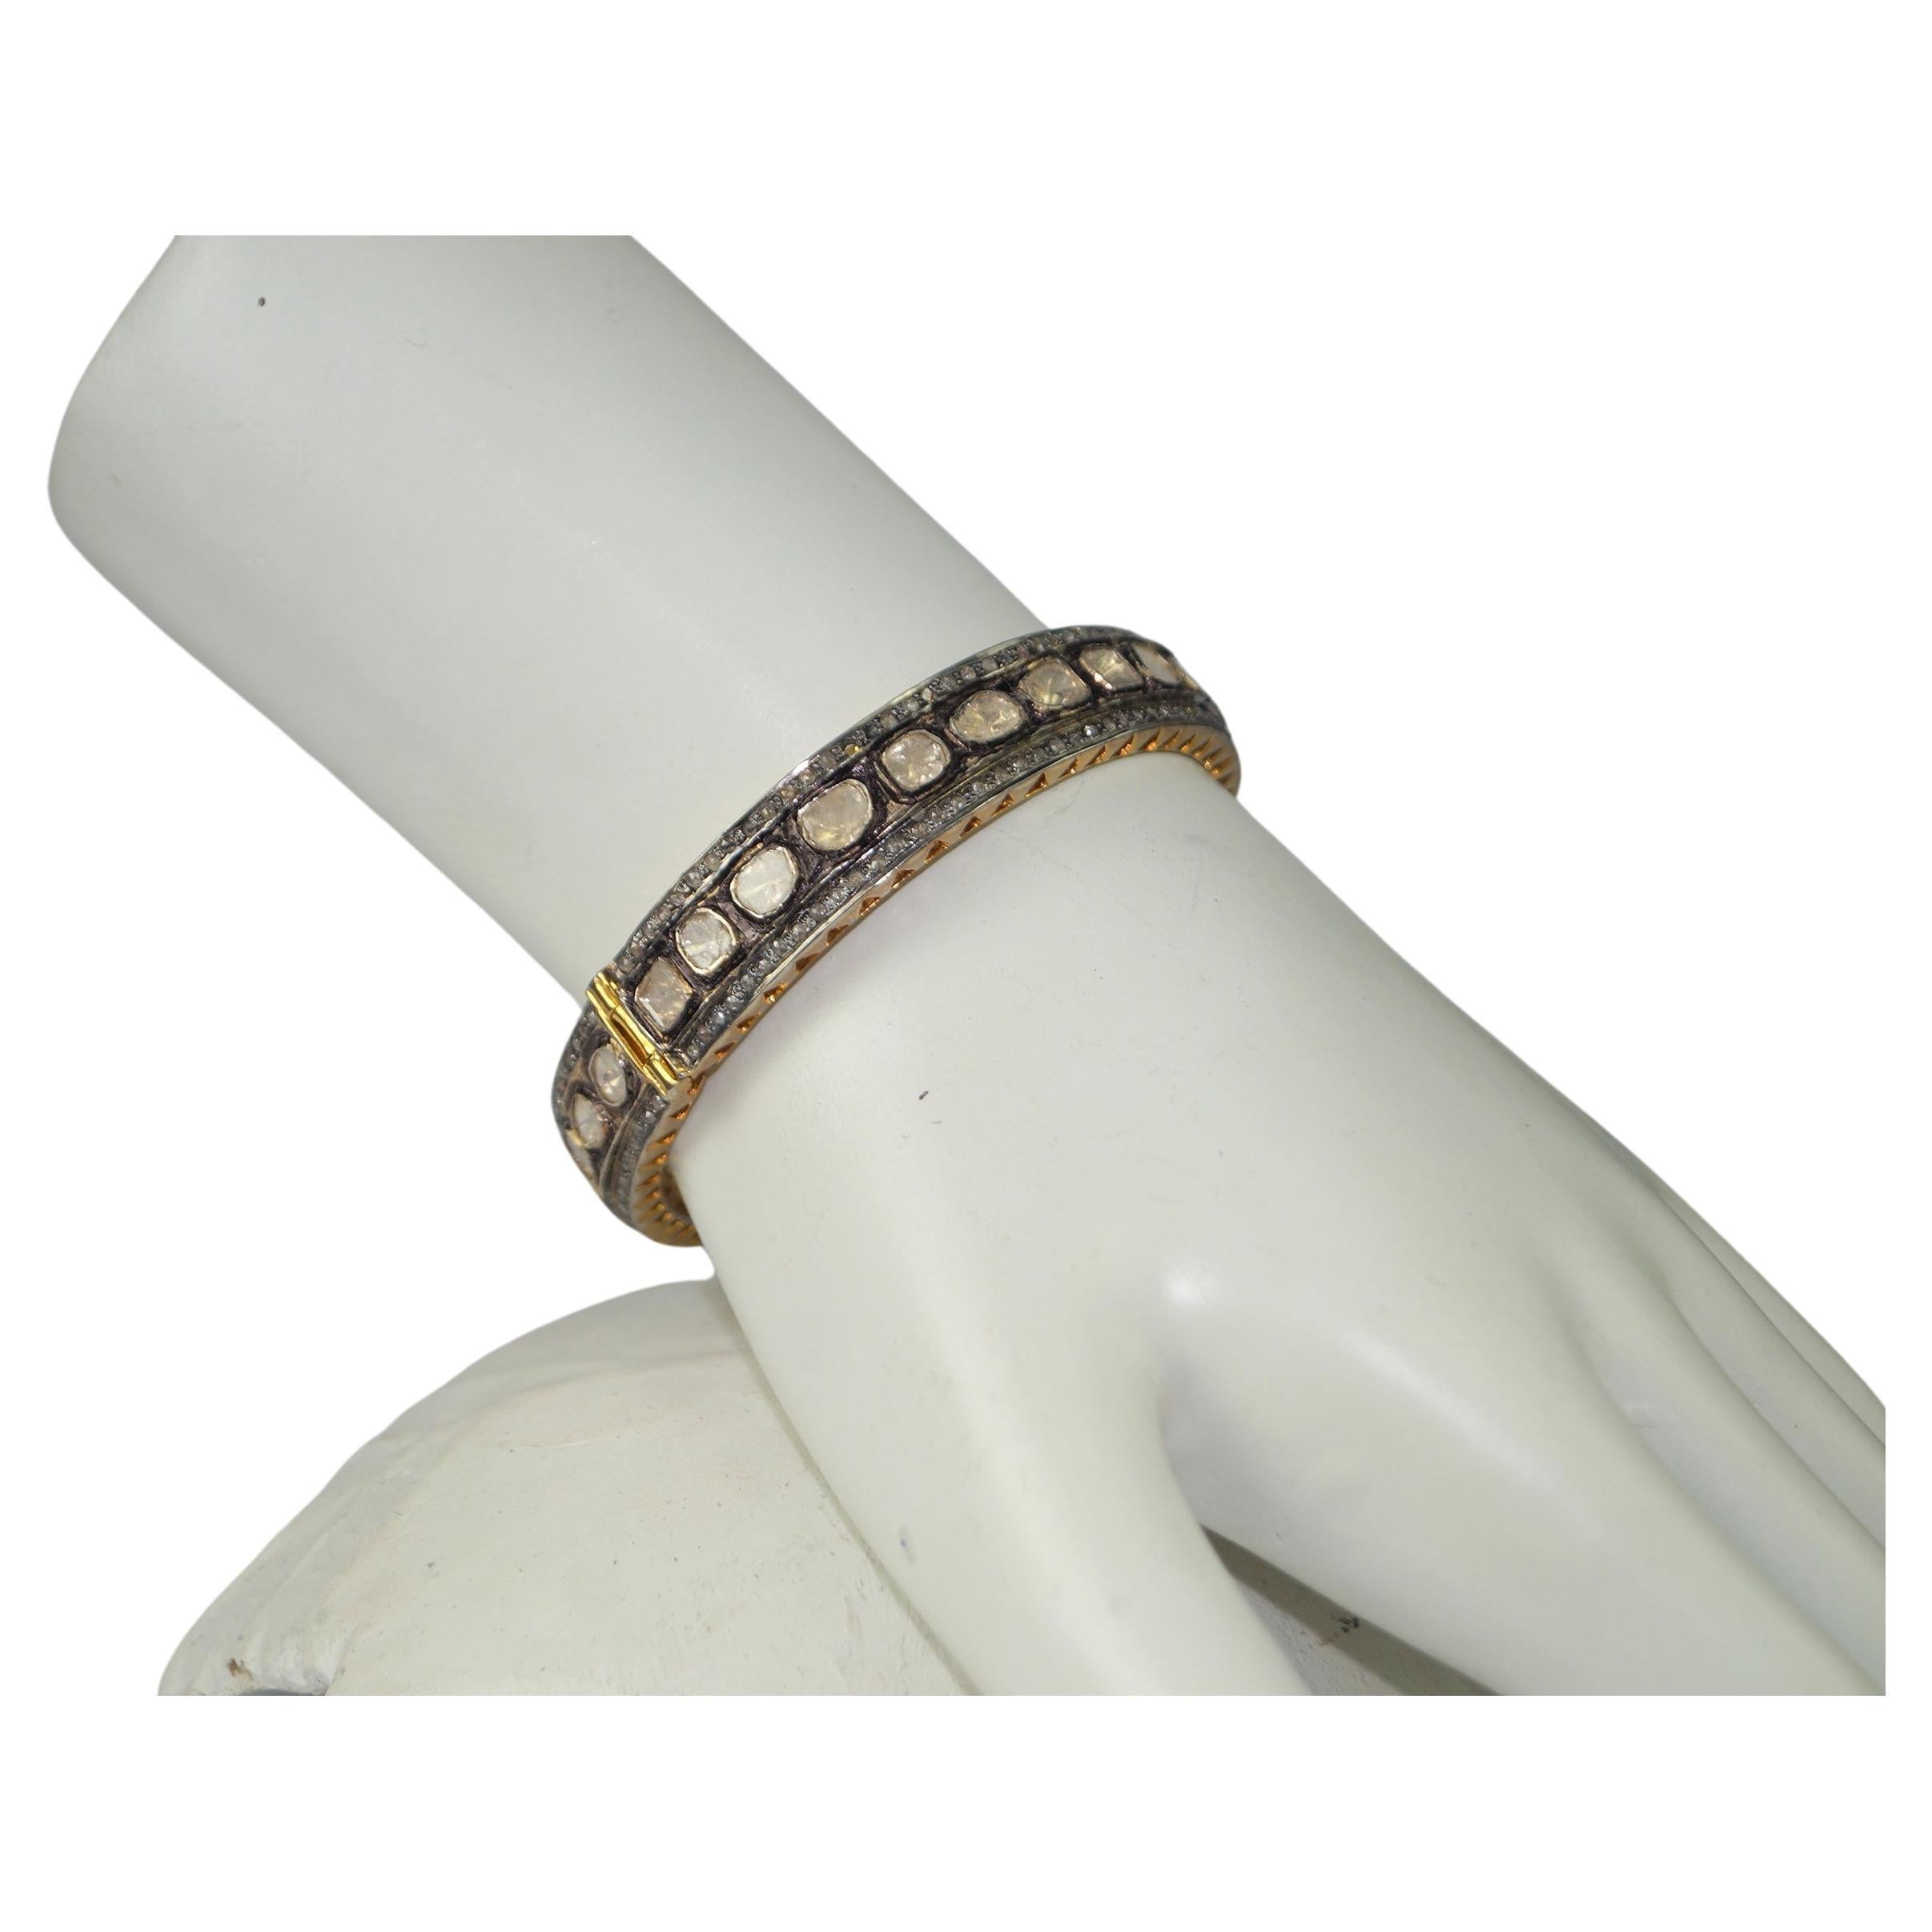 Certified 5.70 carat natural uncut Diamonds sterling silver Gold plated bracelet